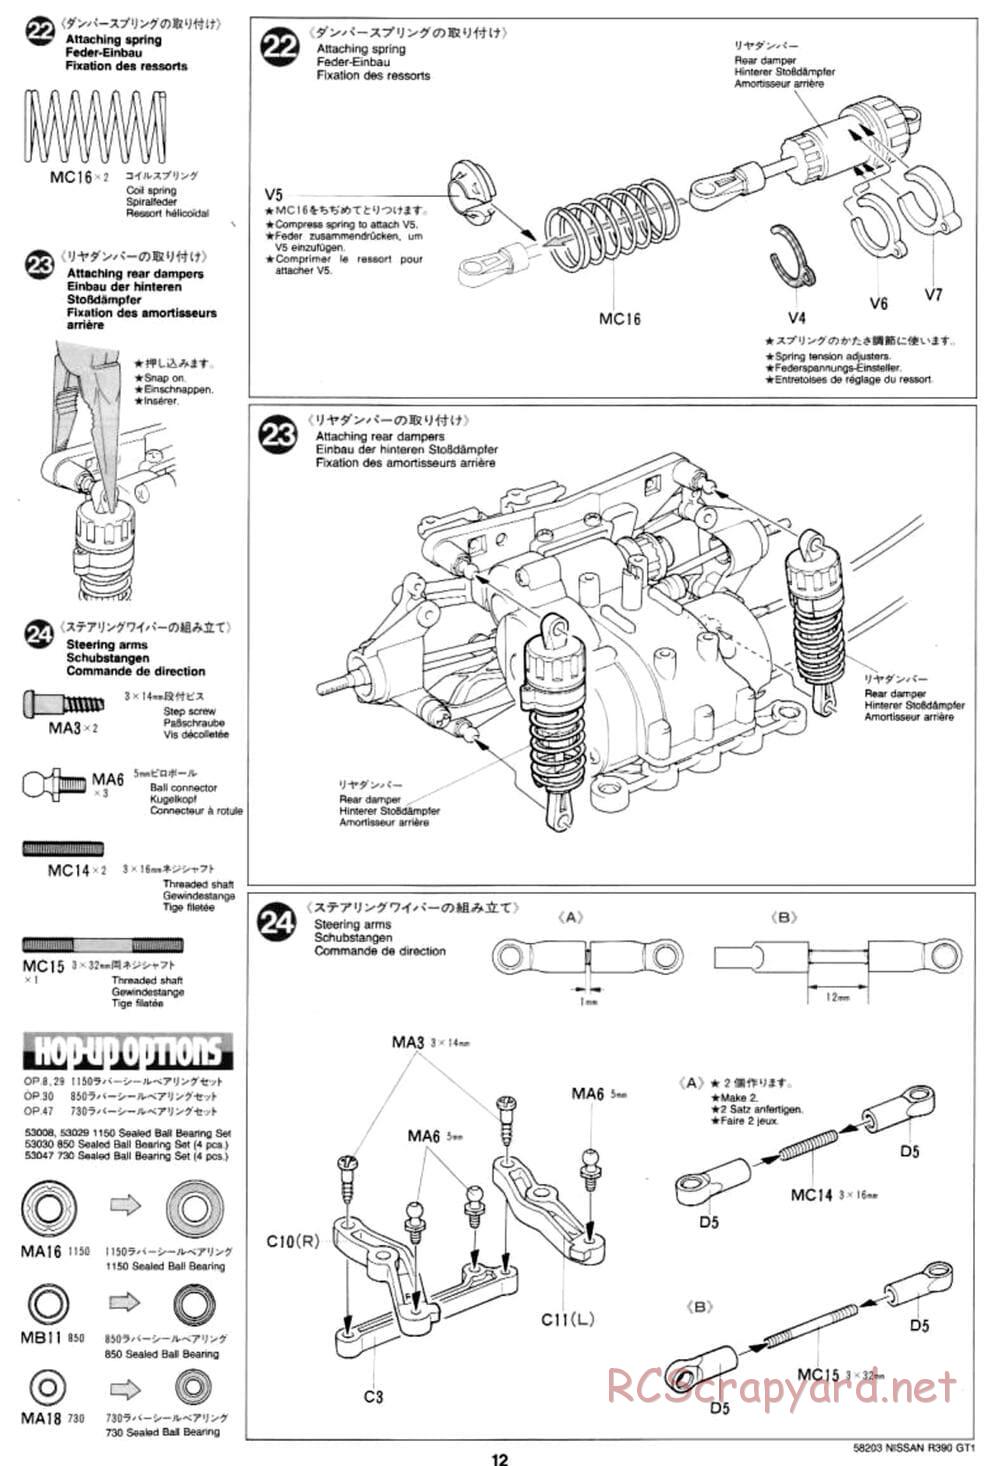 Tamiya - Nissan R390 GT1 - TA-03R Chassis - Manual - Page 12